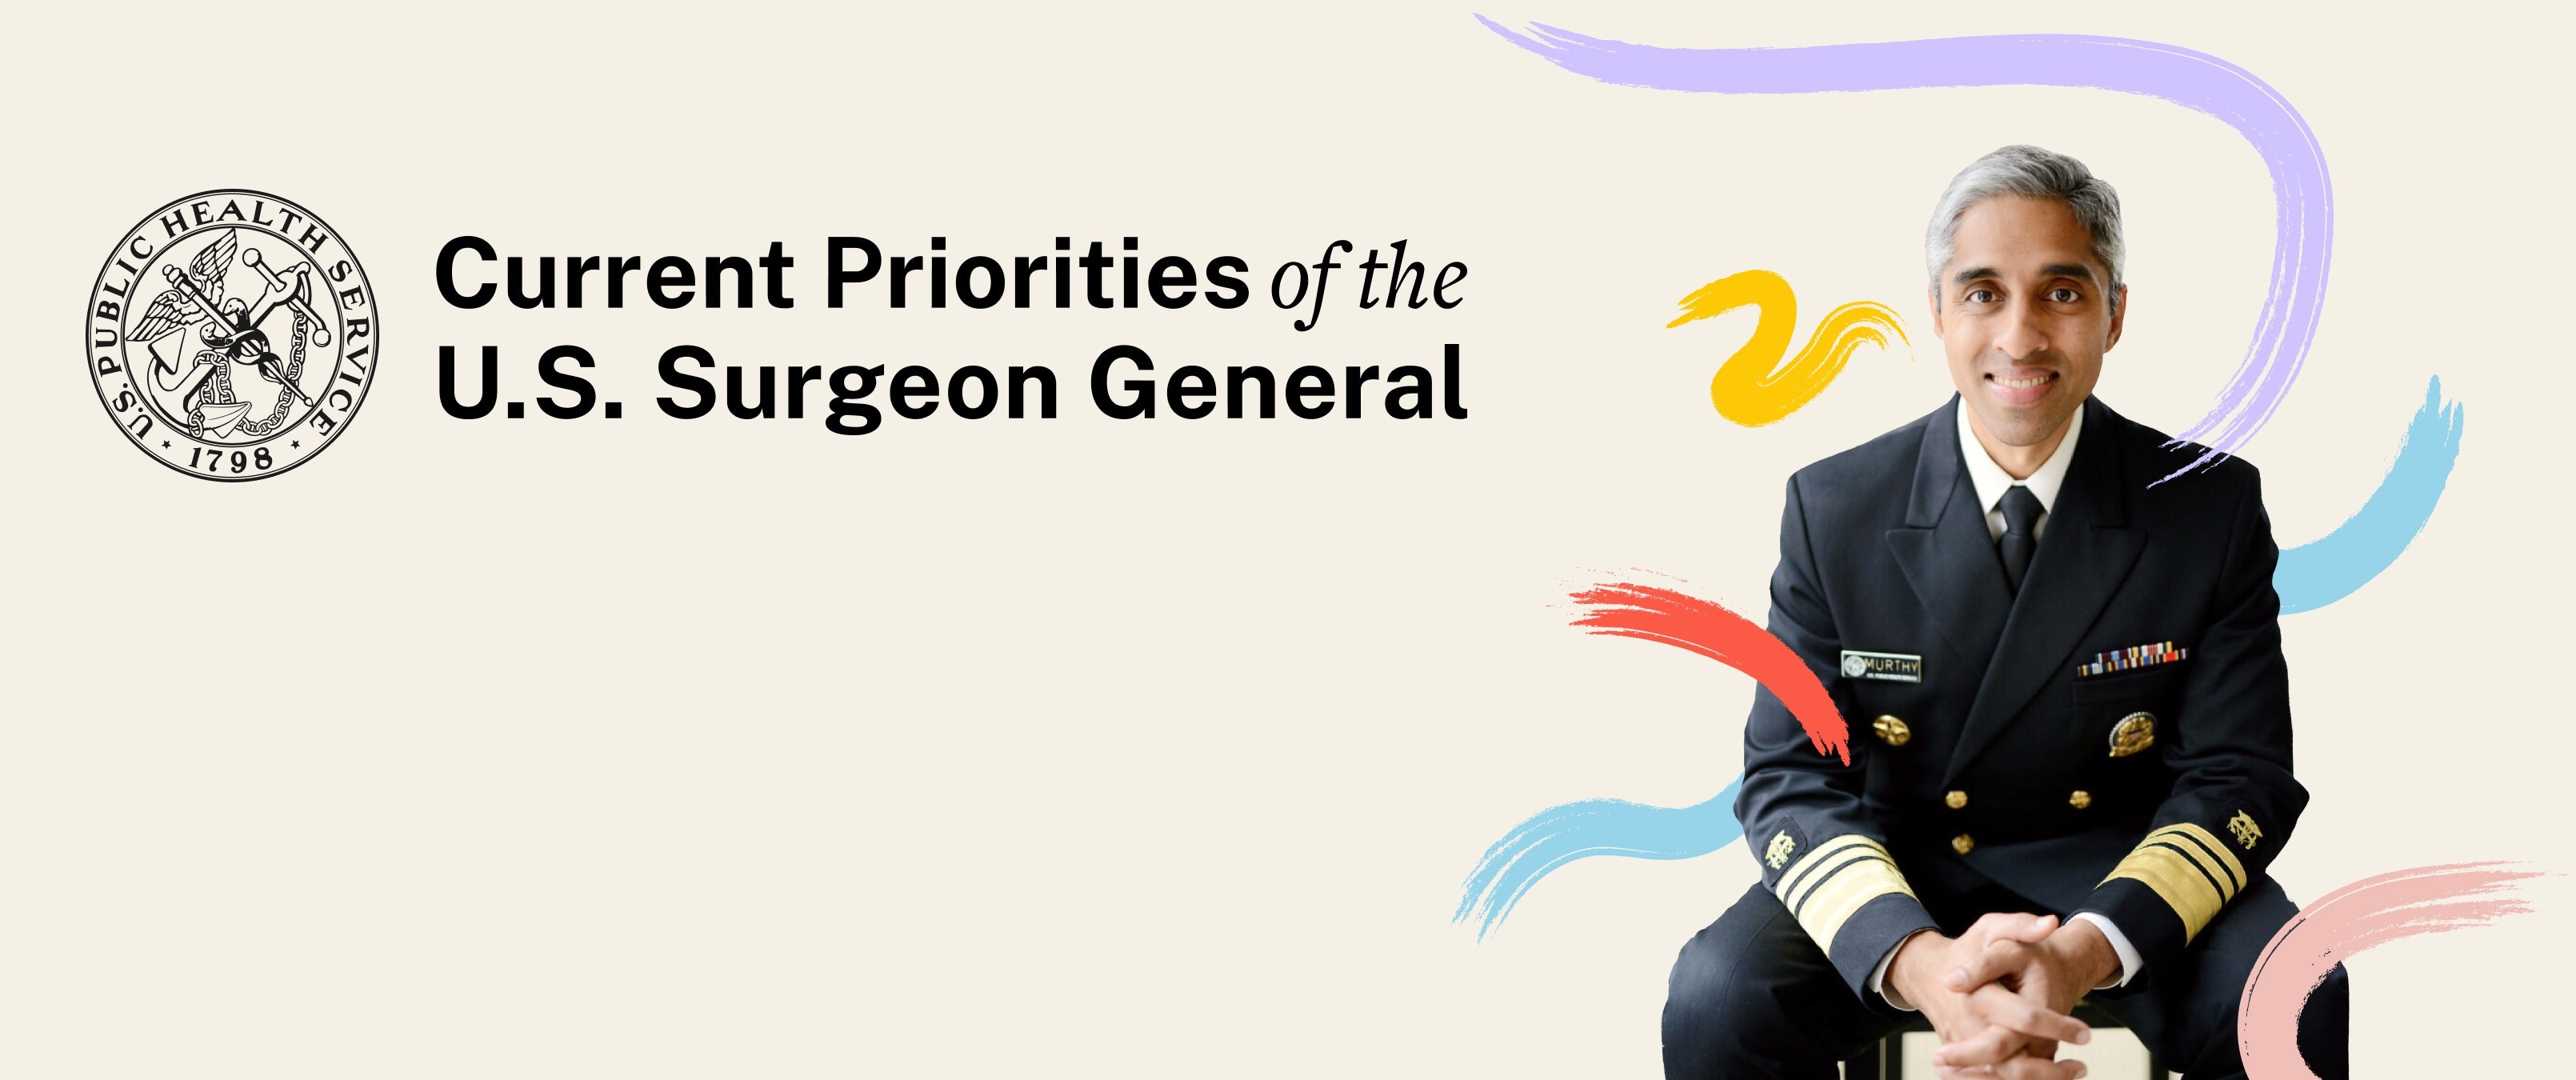 Current Priorities of the U.S. Surgeon General banner